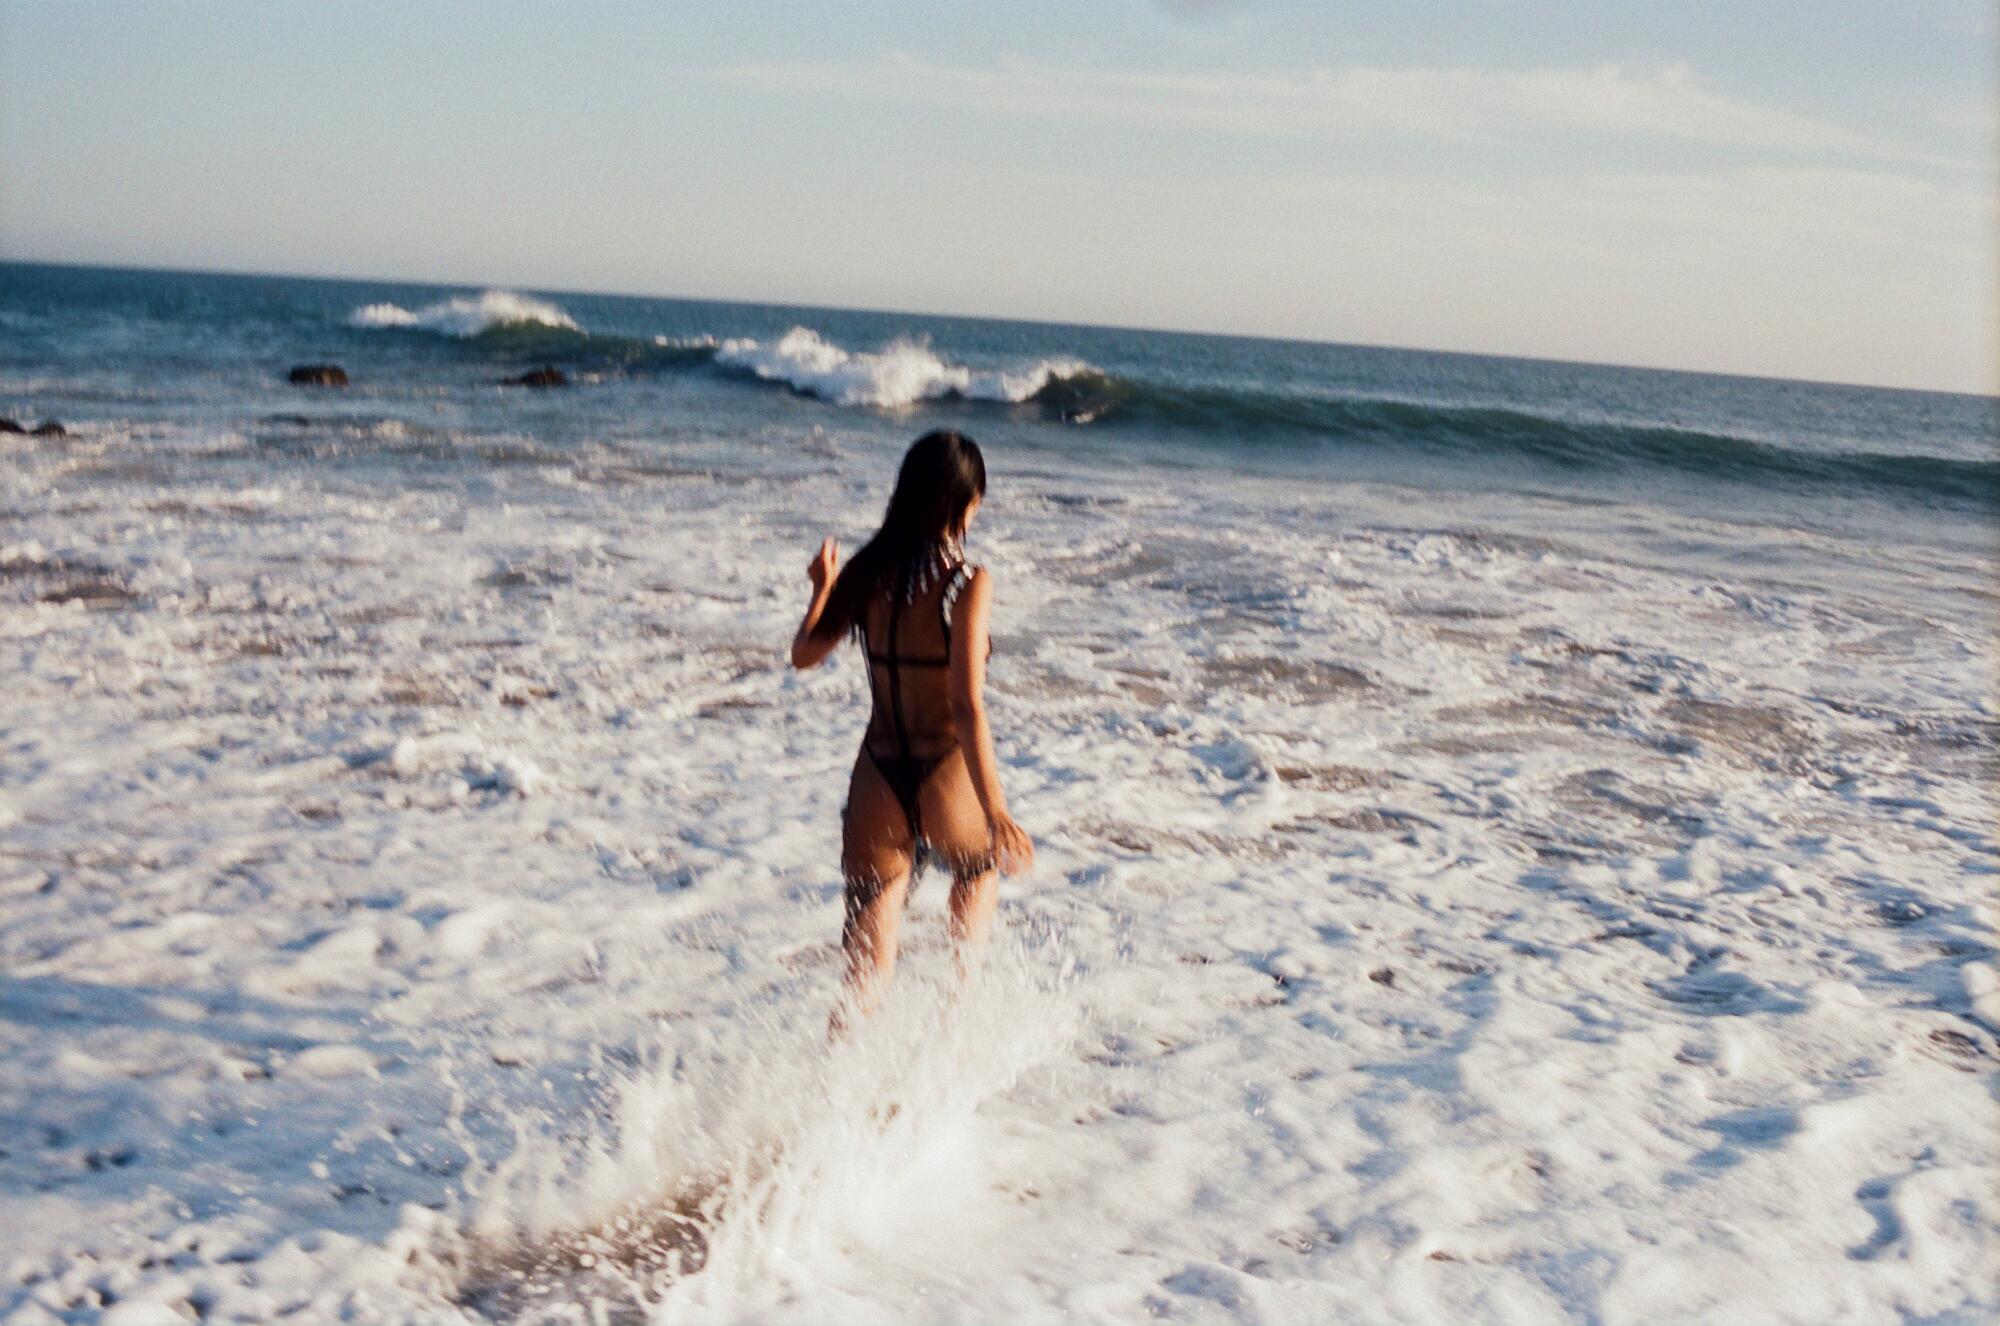 A woman in lingerie runs into the ocean.